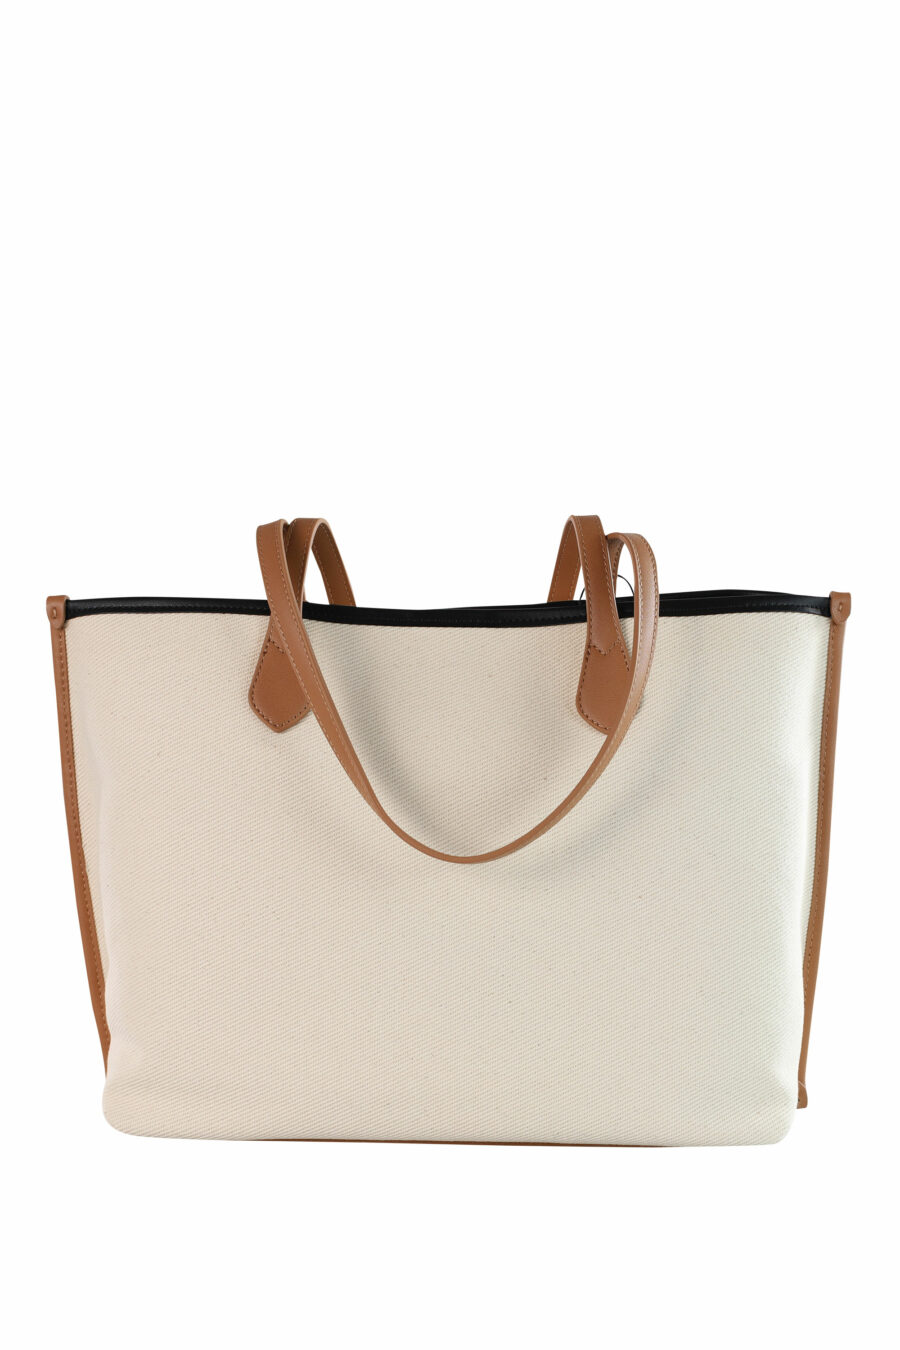 White shopper bag with black heart maxilogo - IMG 3678